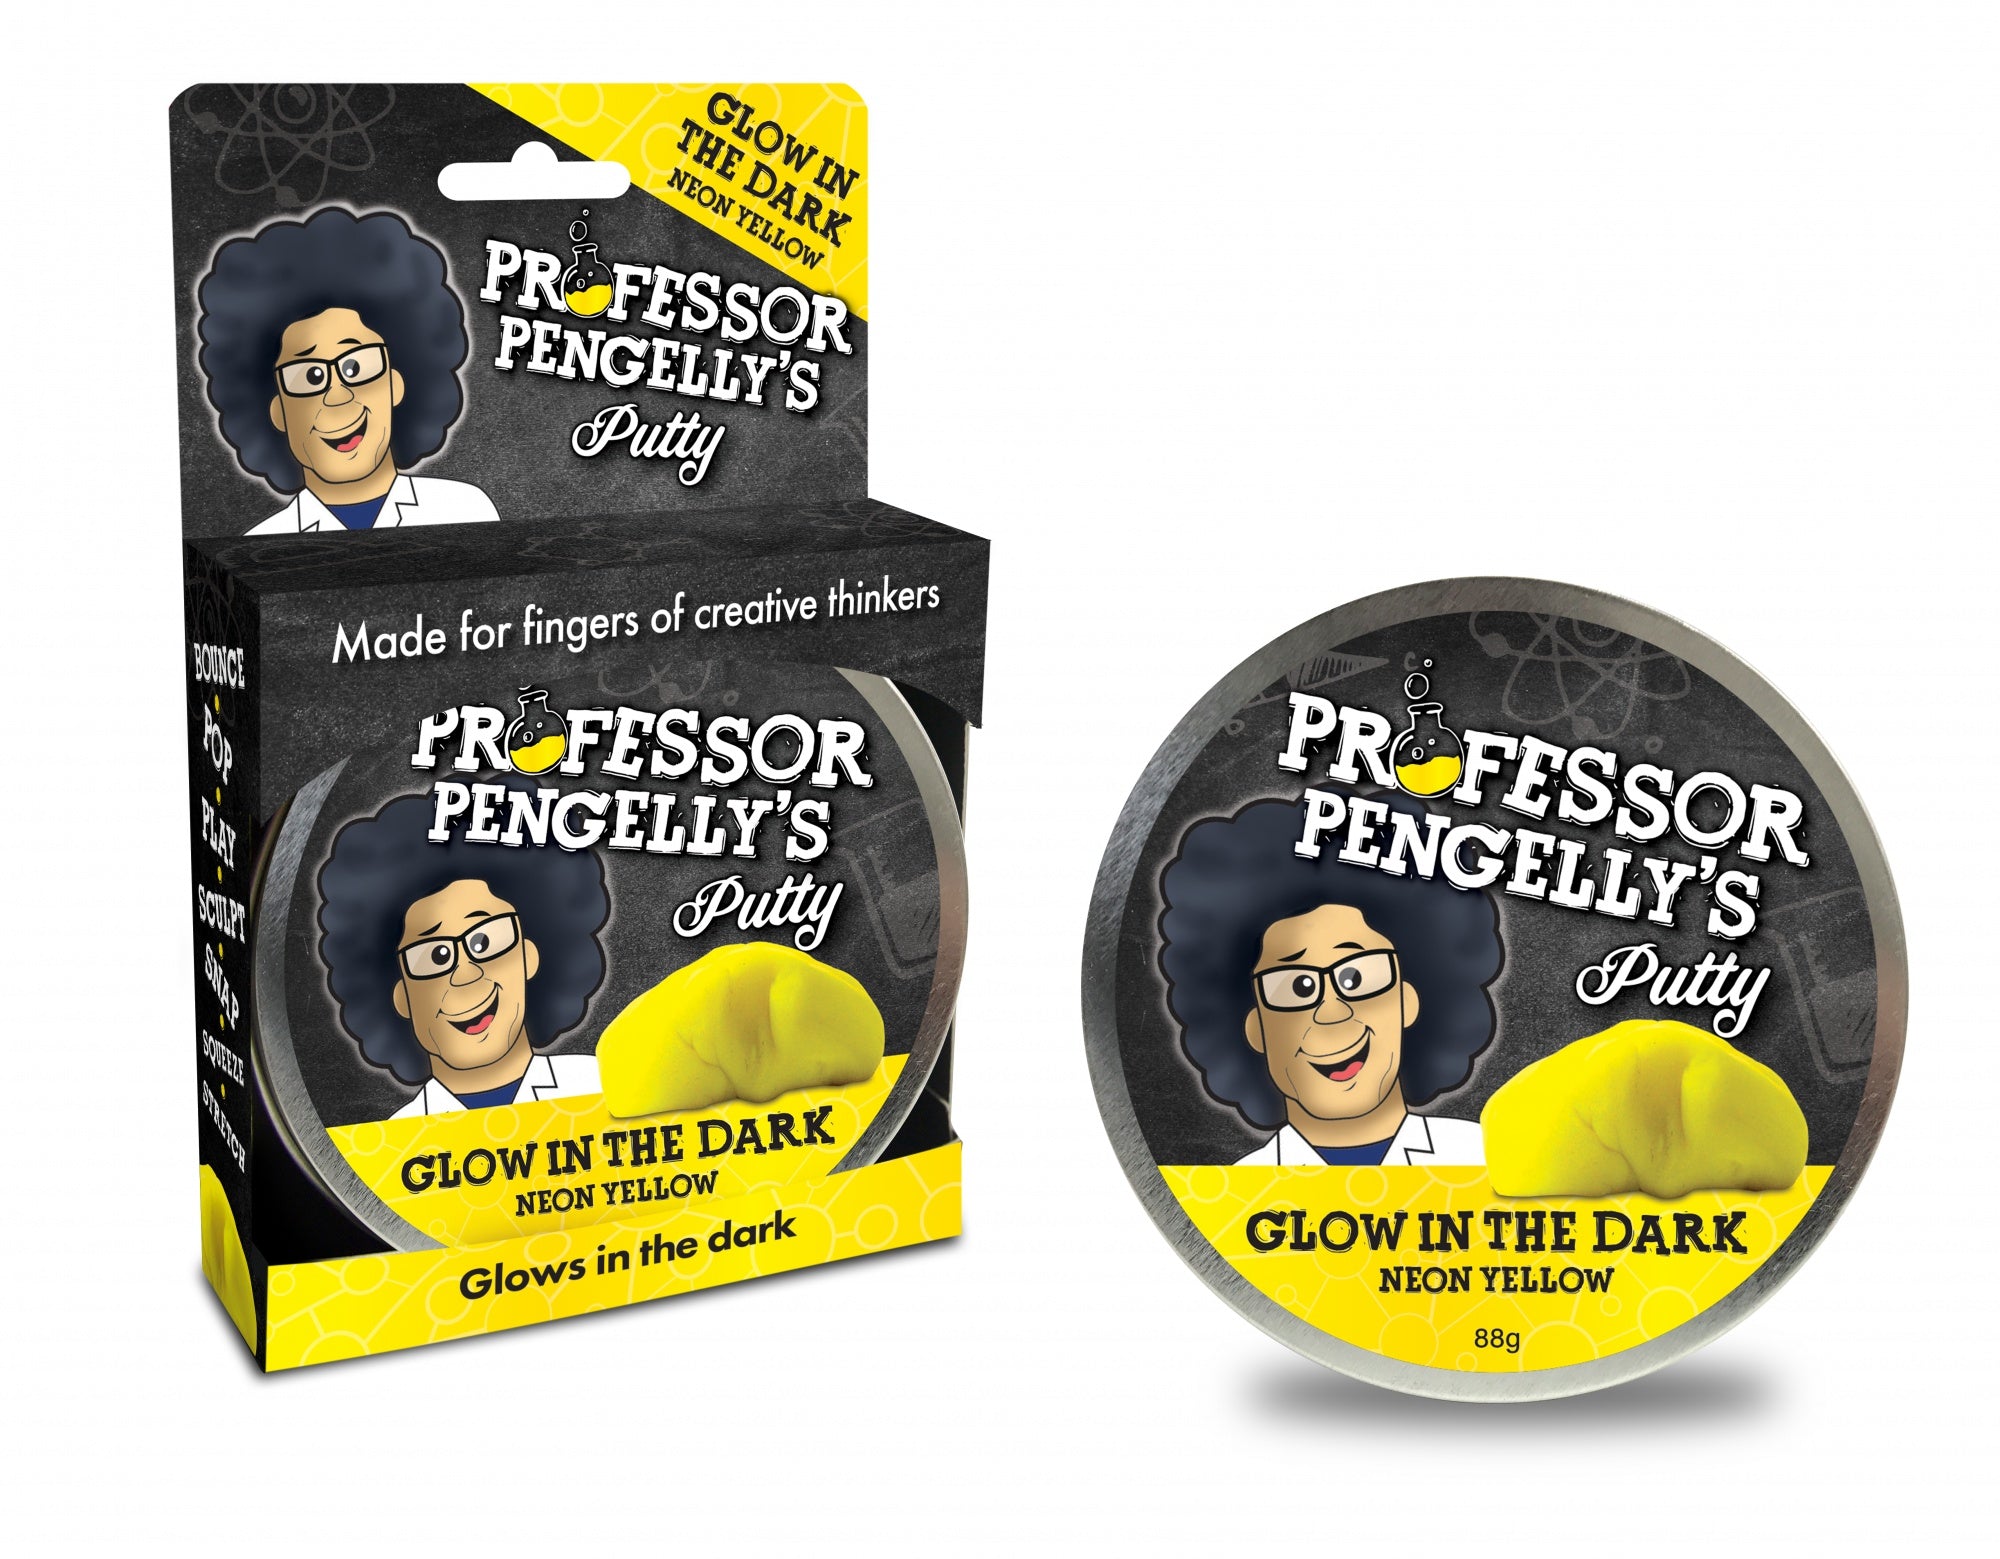 Professor Pengelly's Glow in the Dark Neon Yellow Putty